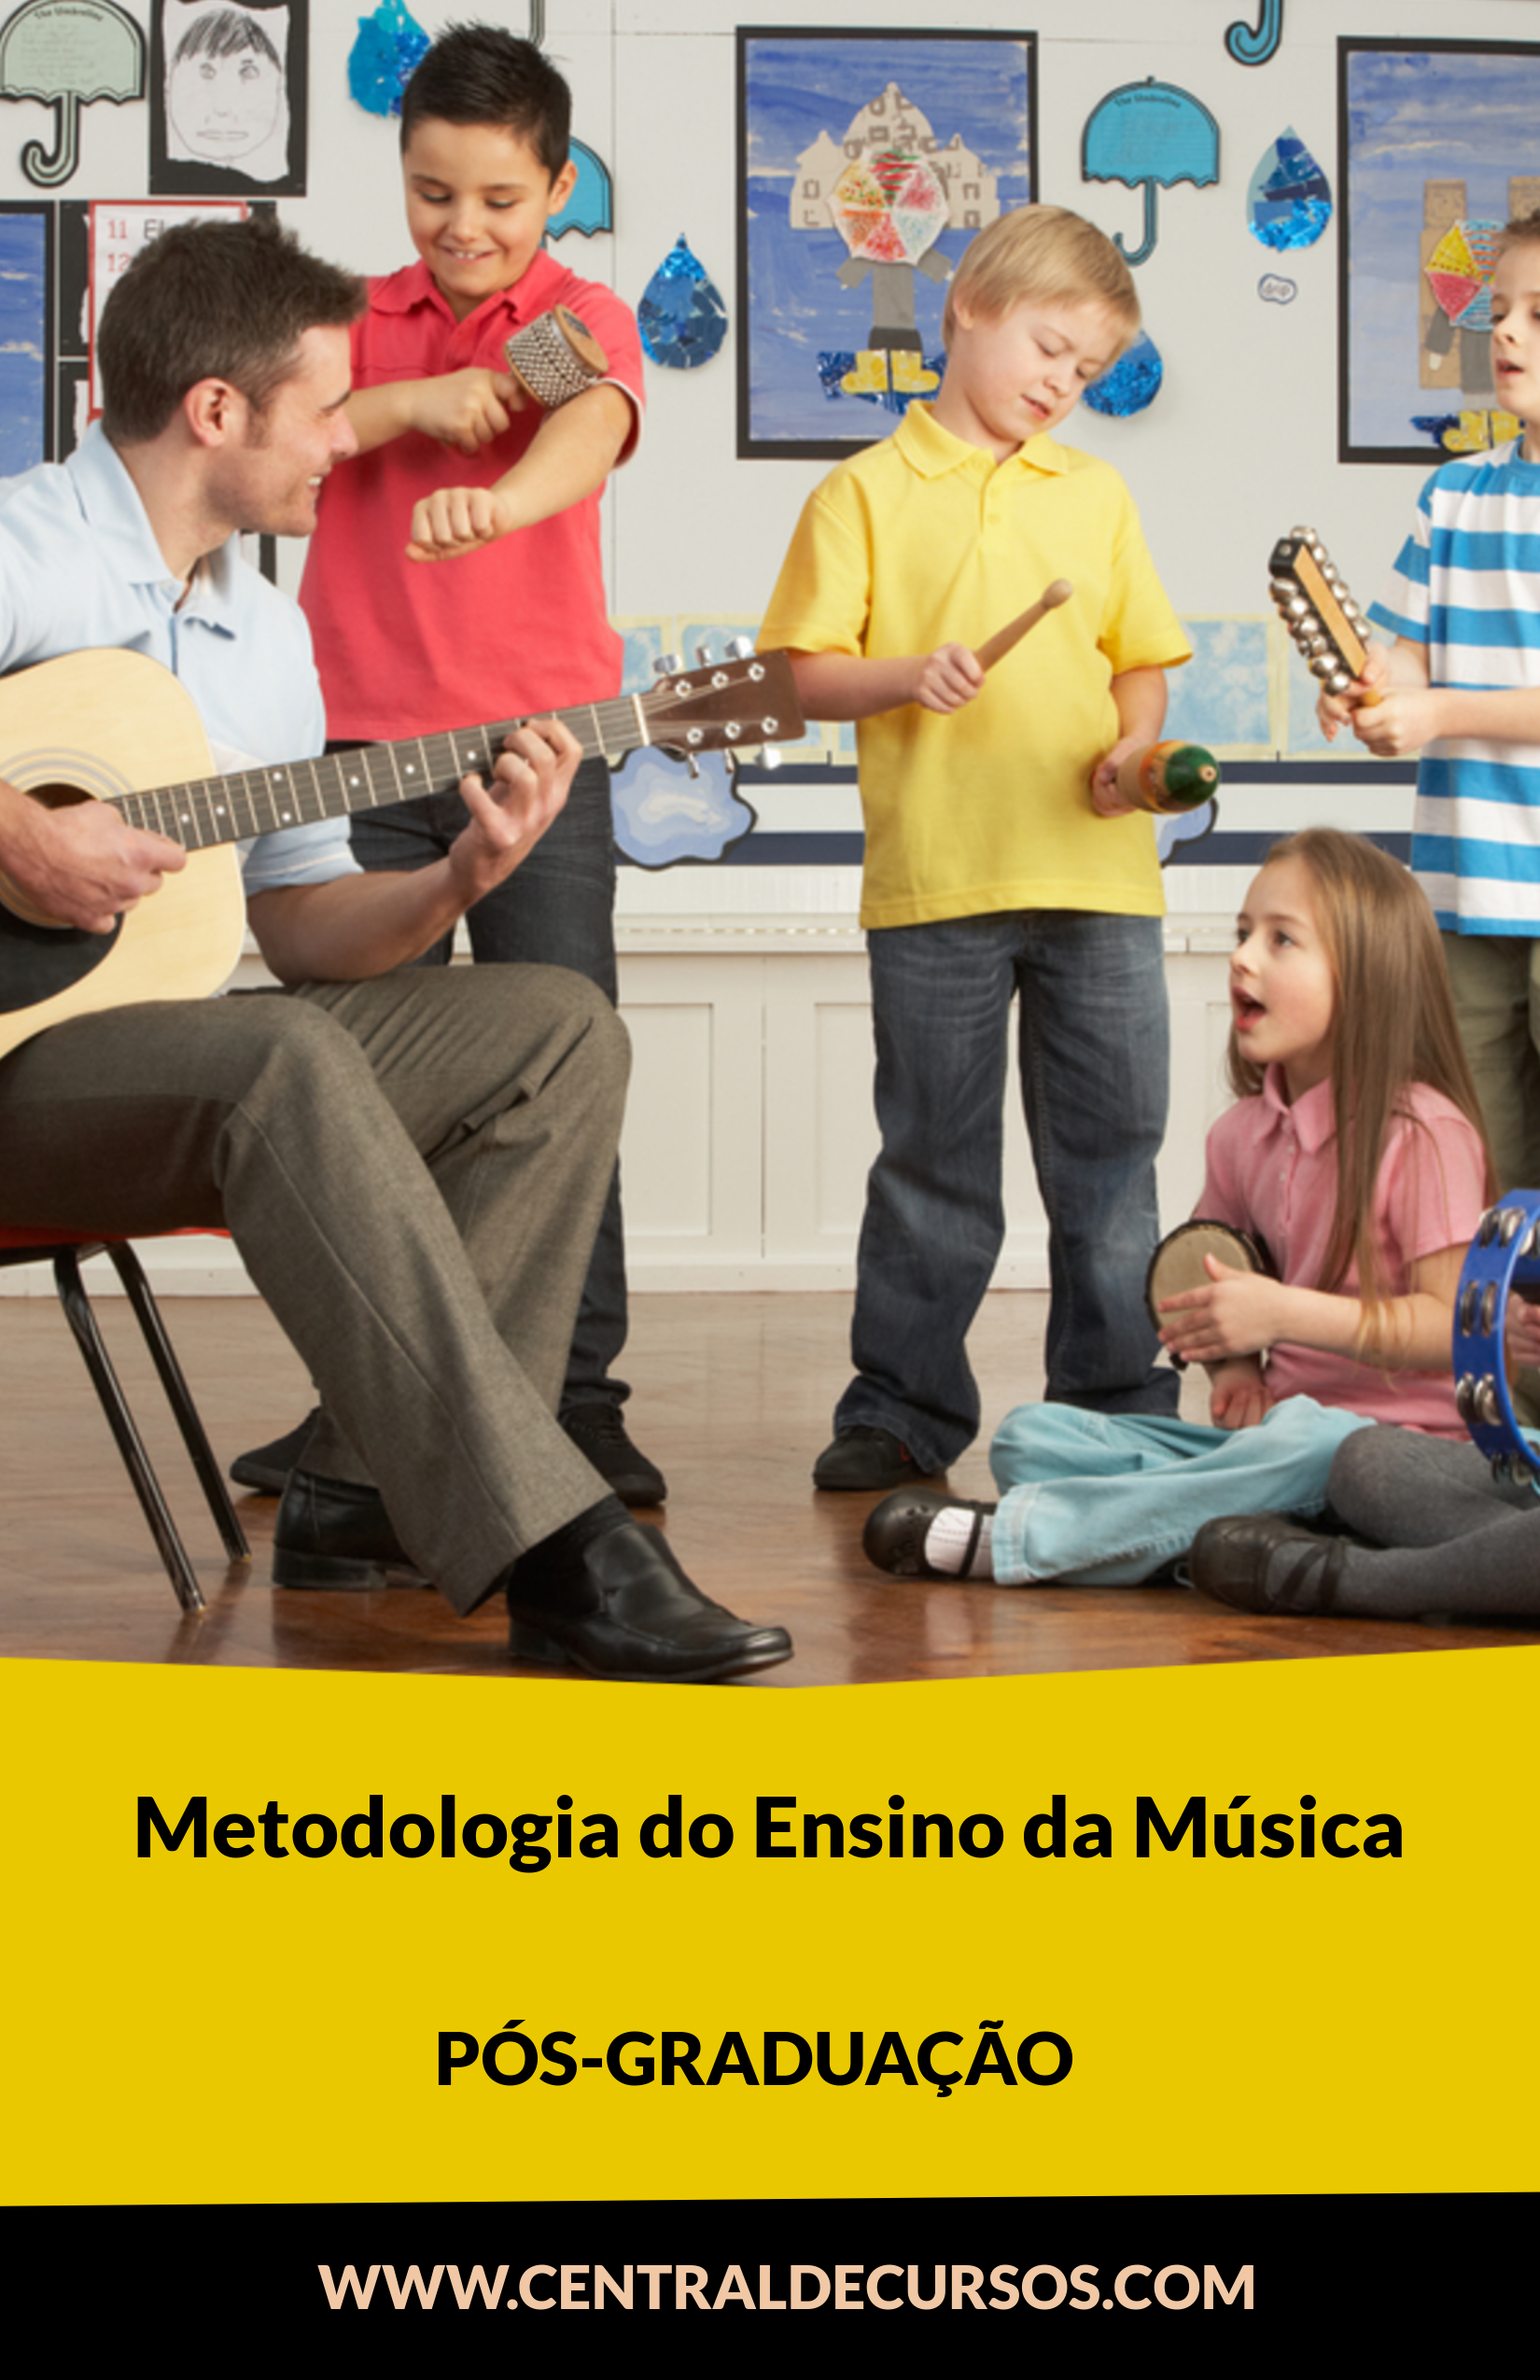  Metodologia do Ensino da Música
